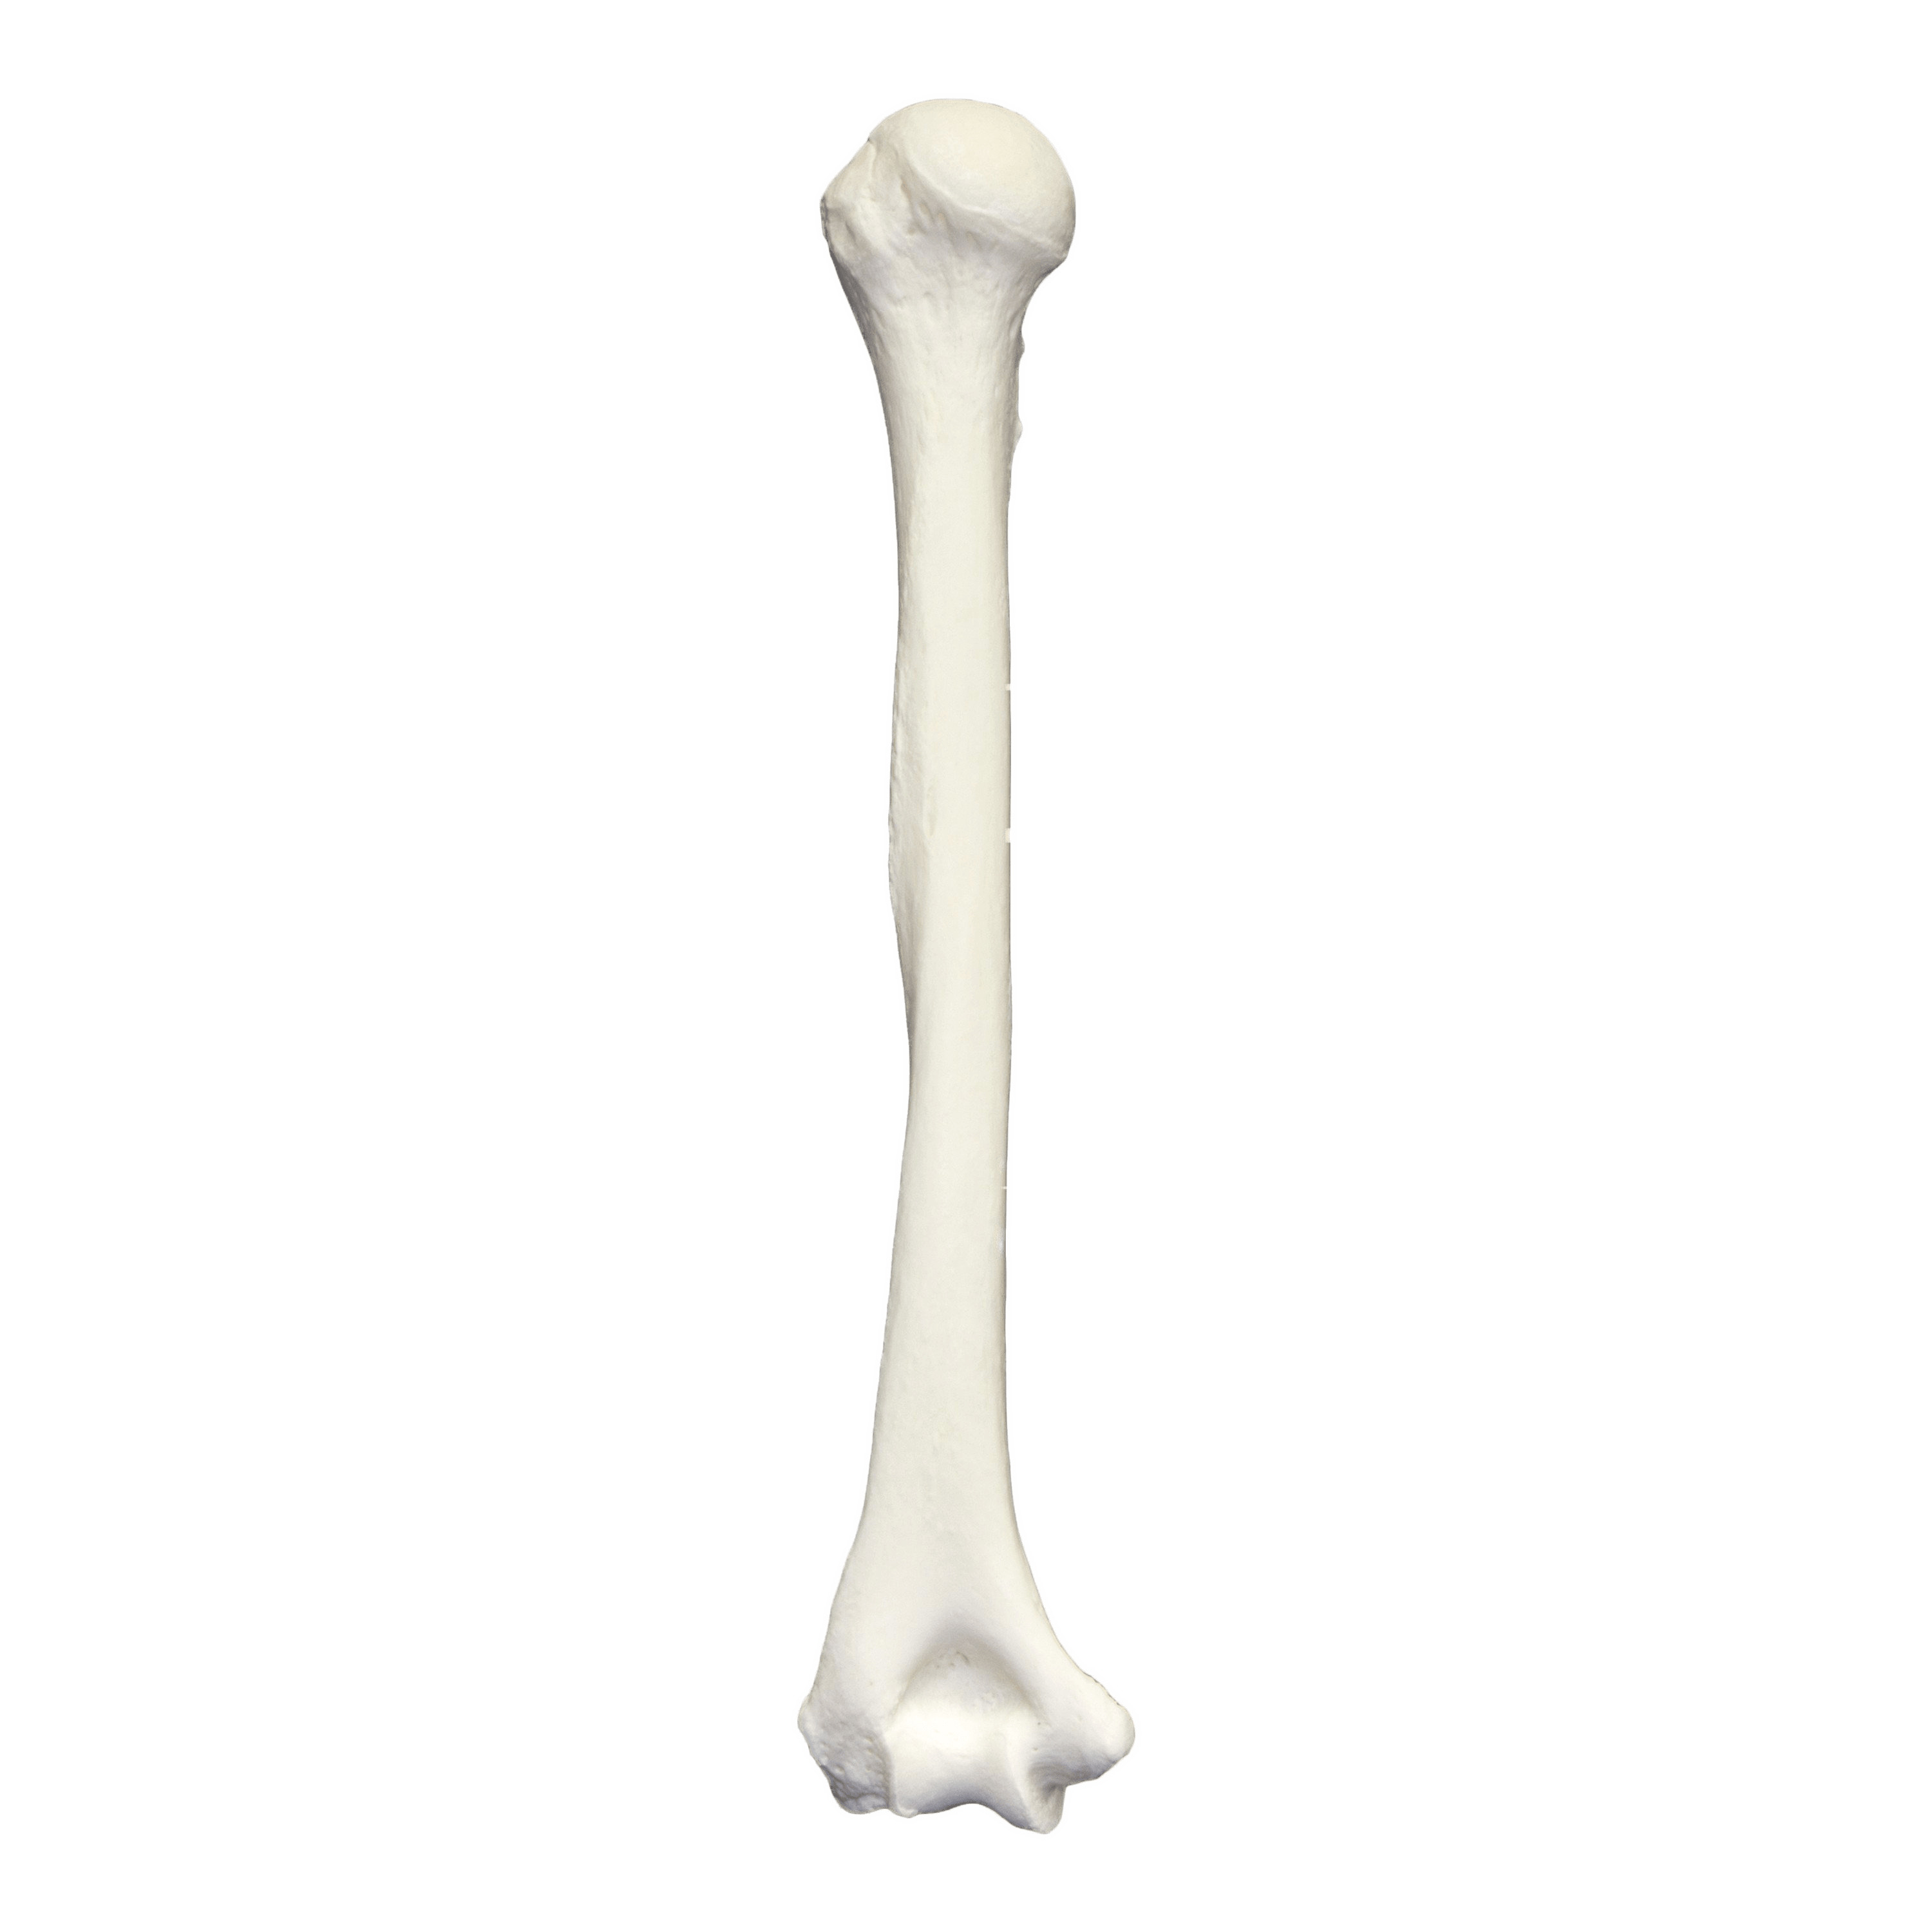 Humerus Bone icons